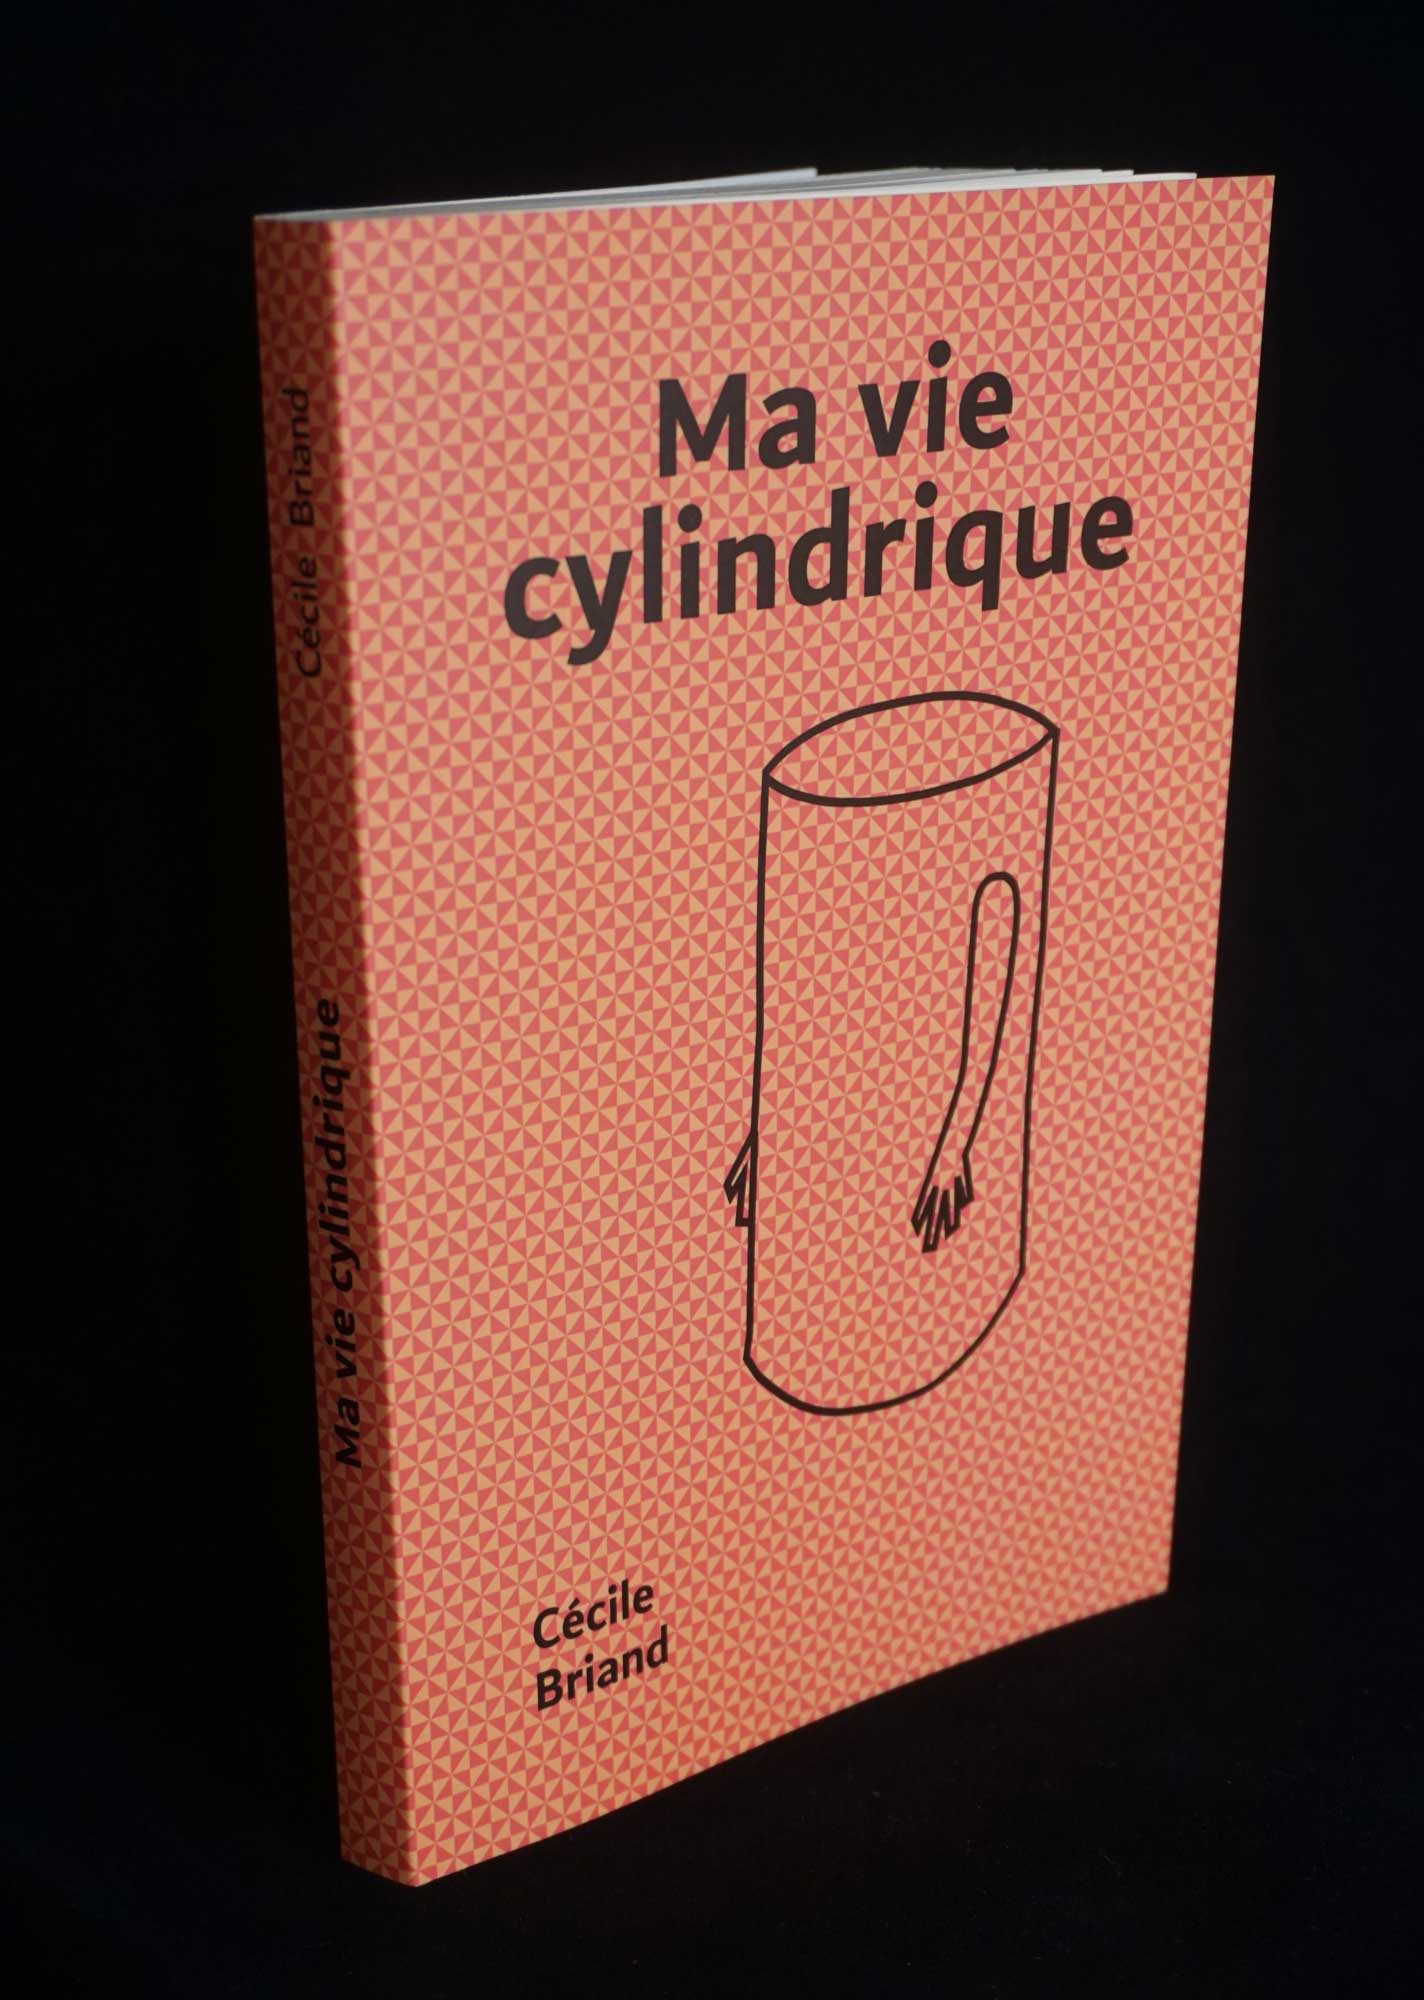 the book ma vie cylindrique cécile briand